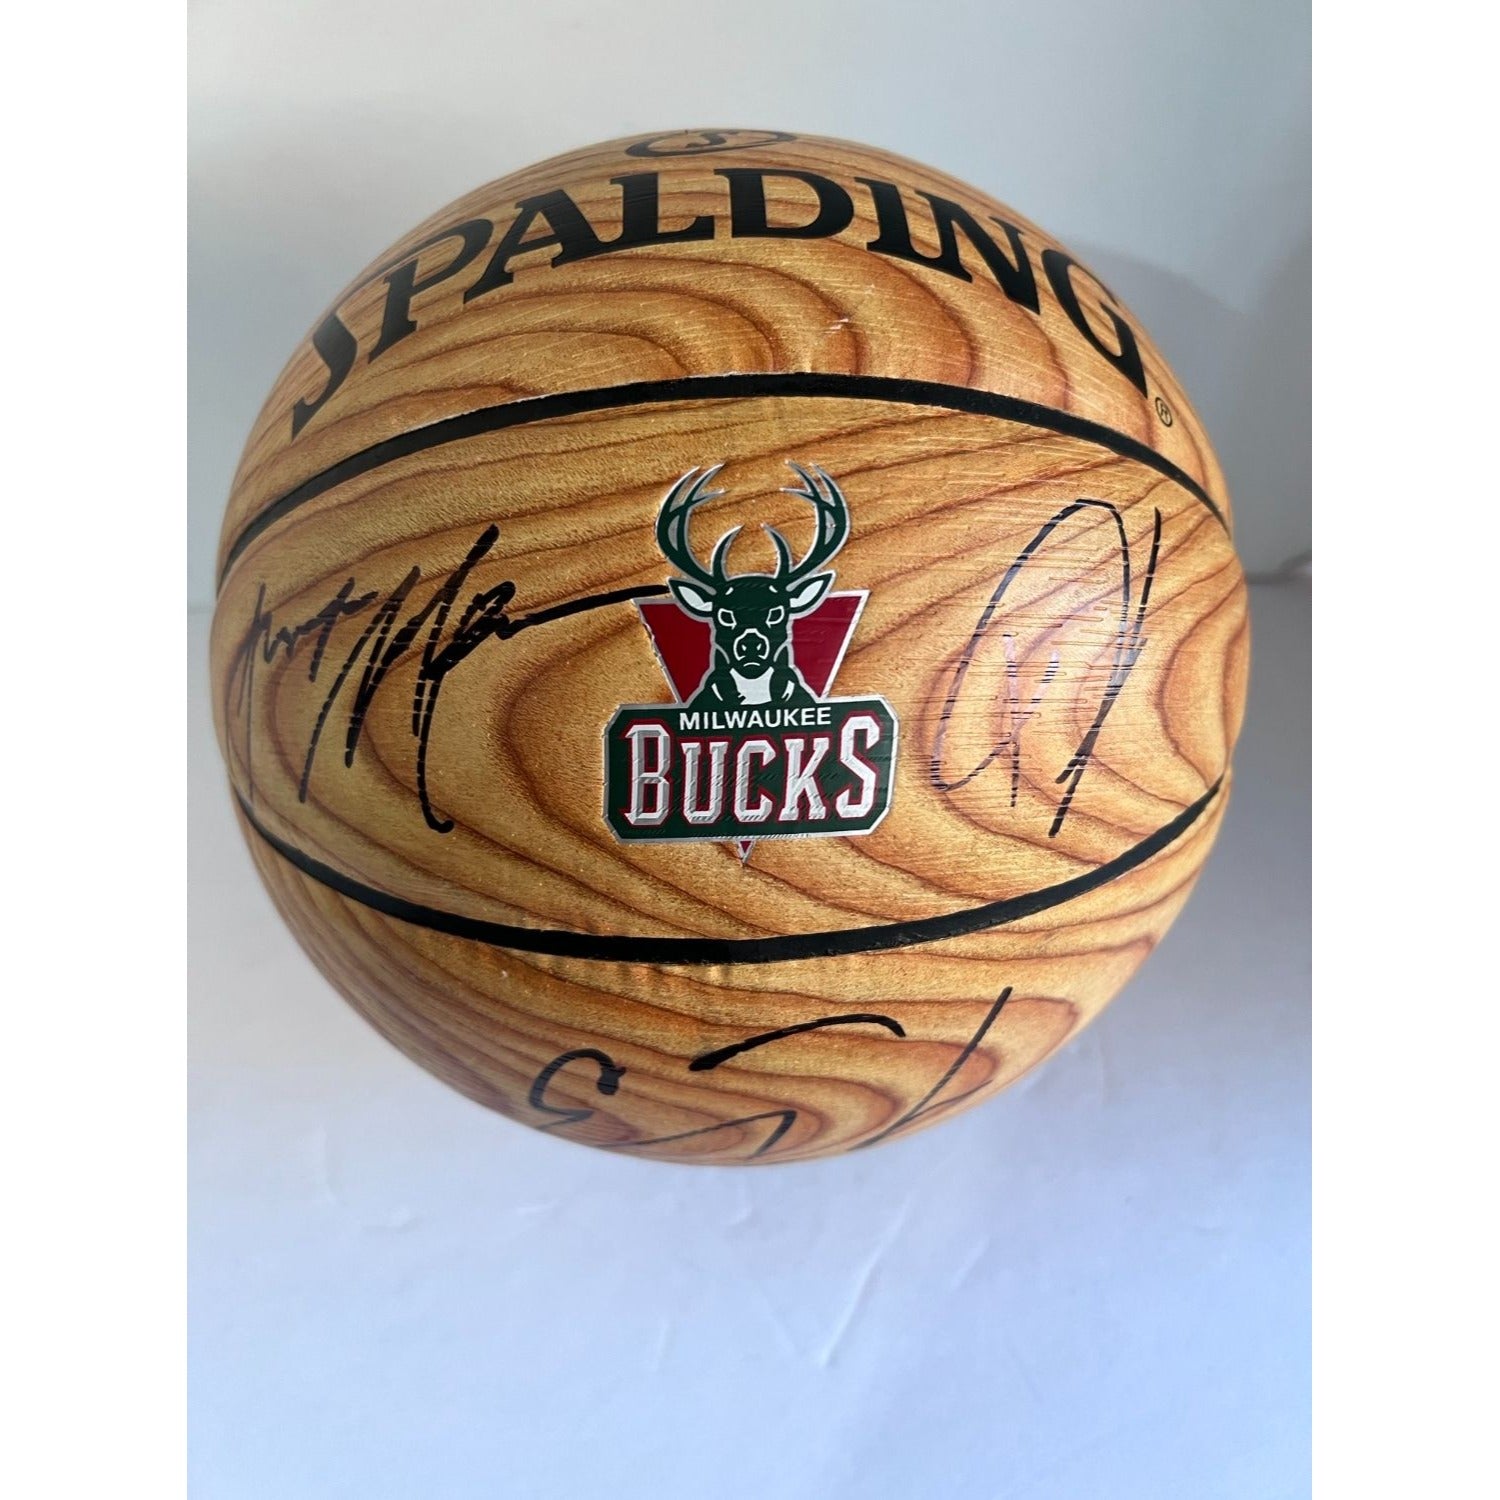 Milwaukee Bucks NBA champions team signed basketball with proof